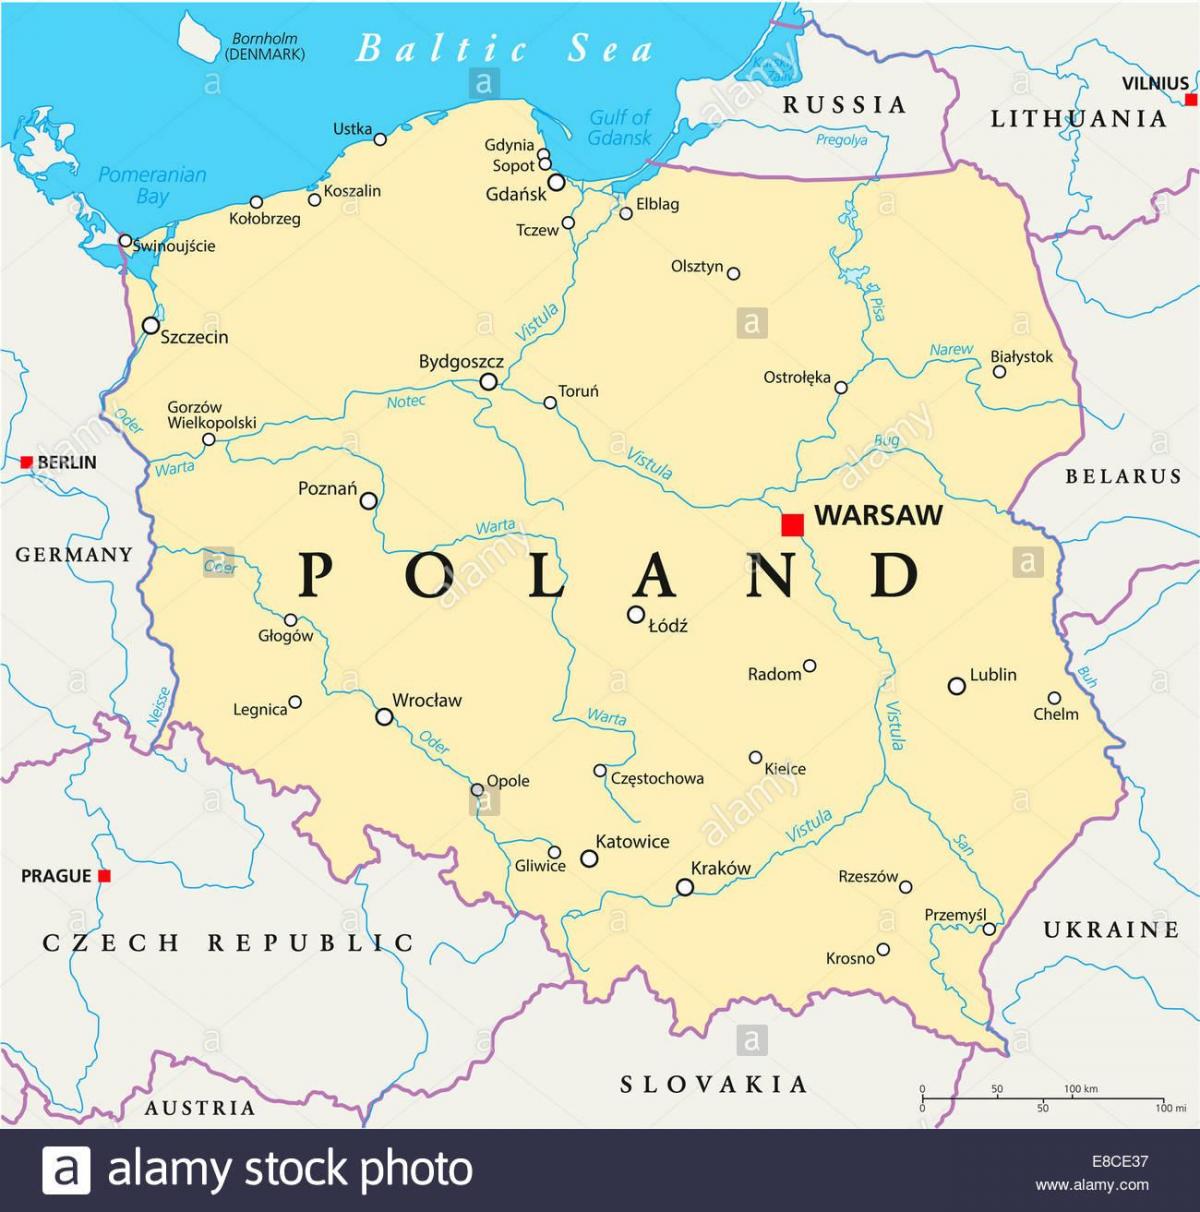 Varsovian kokapena munduko mapa